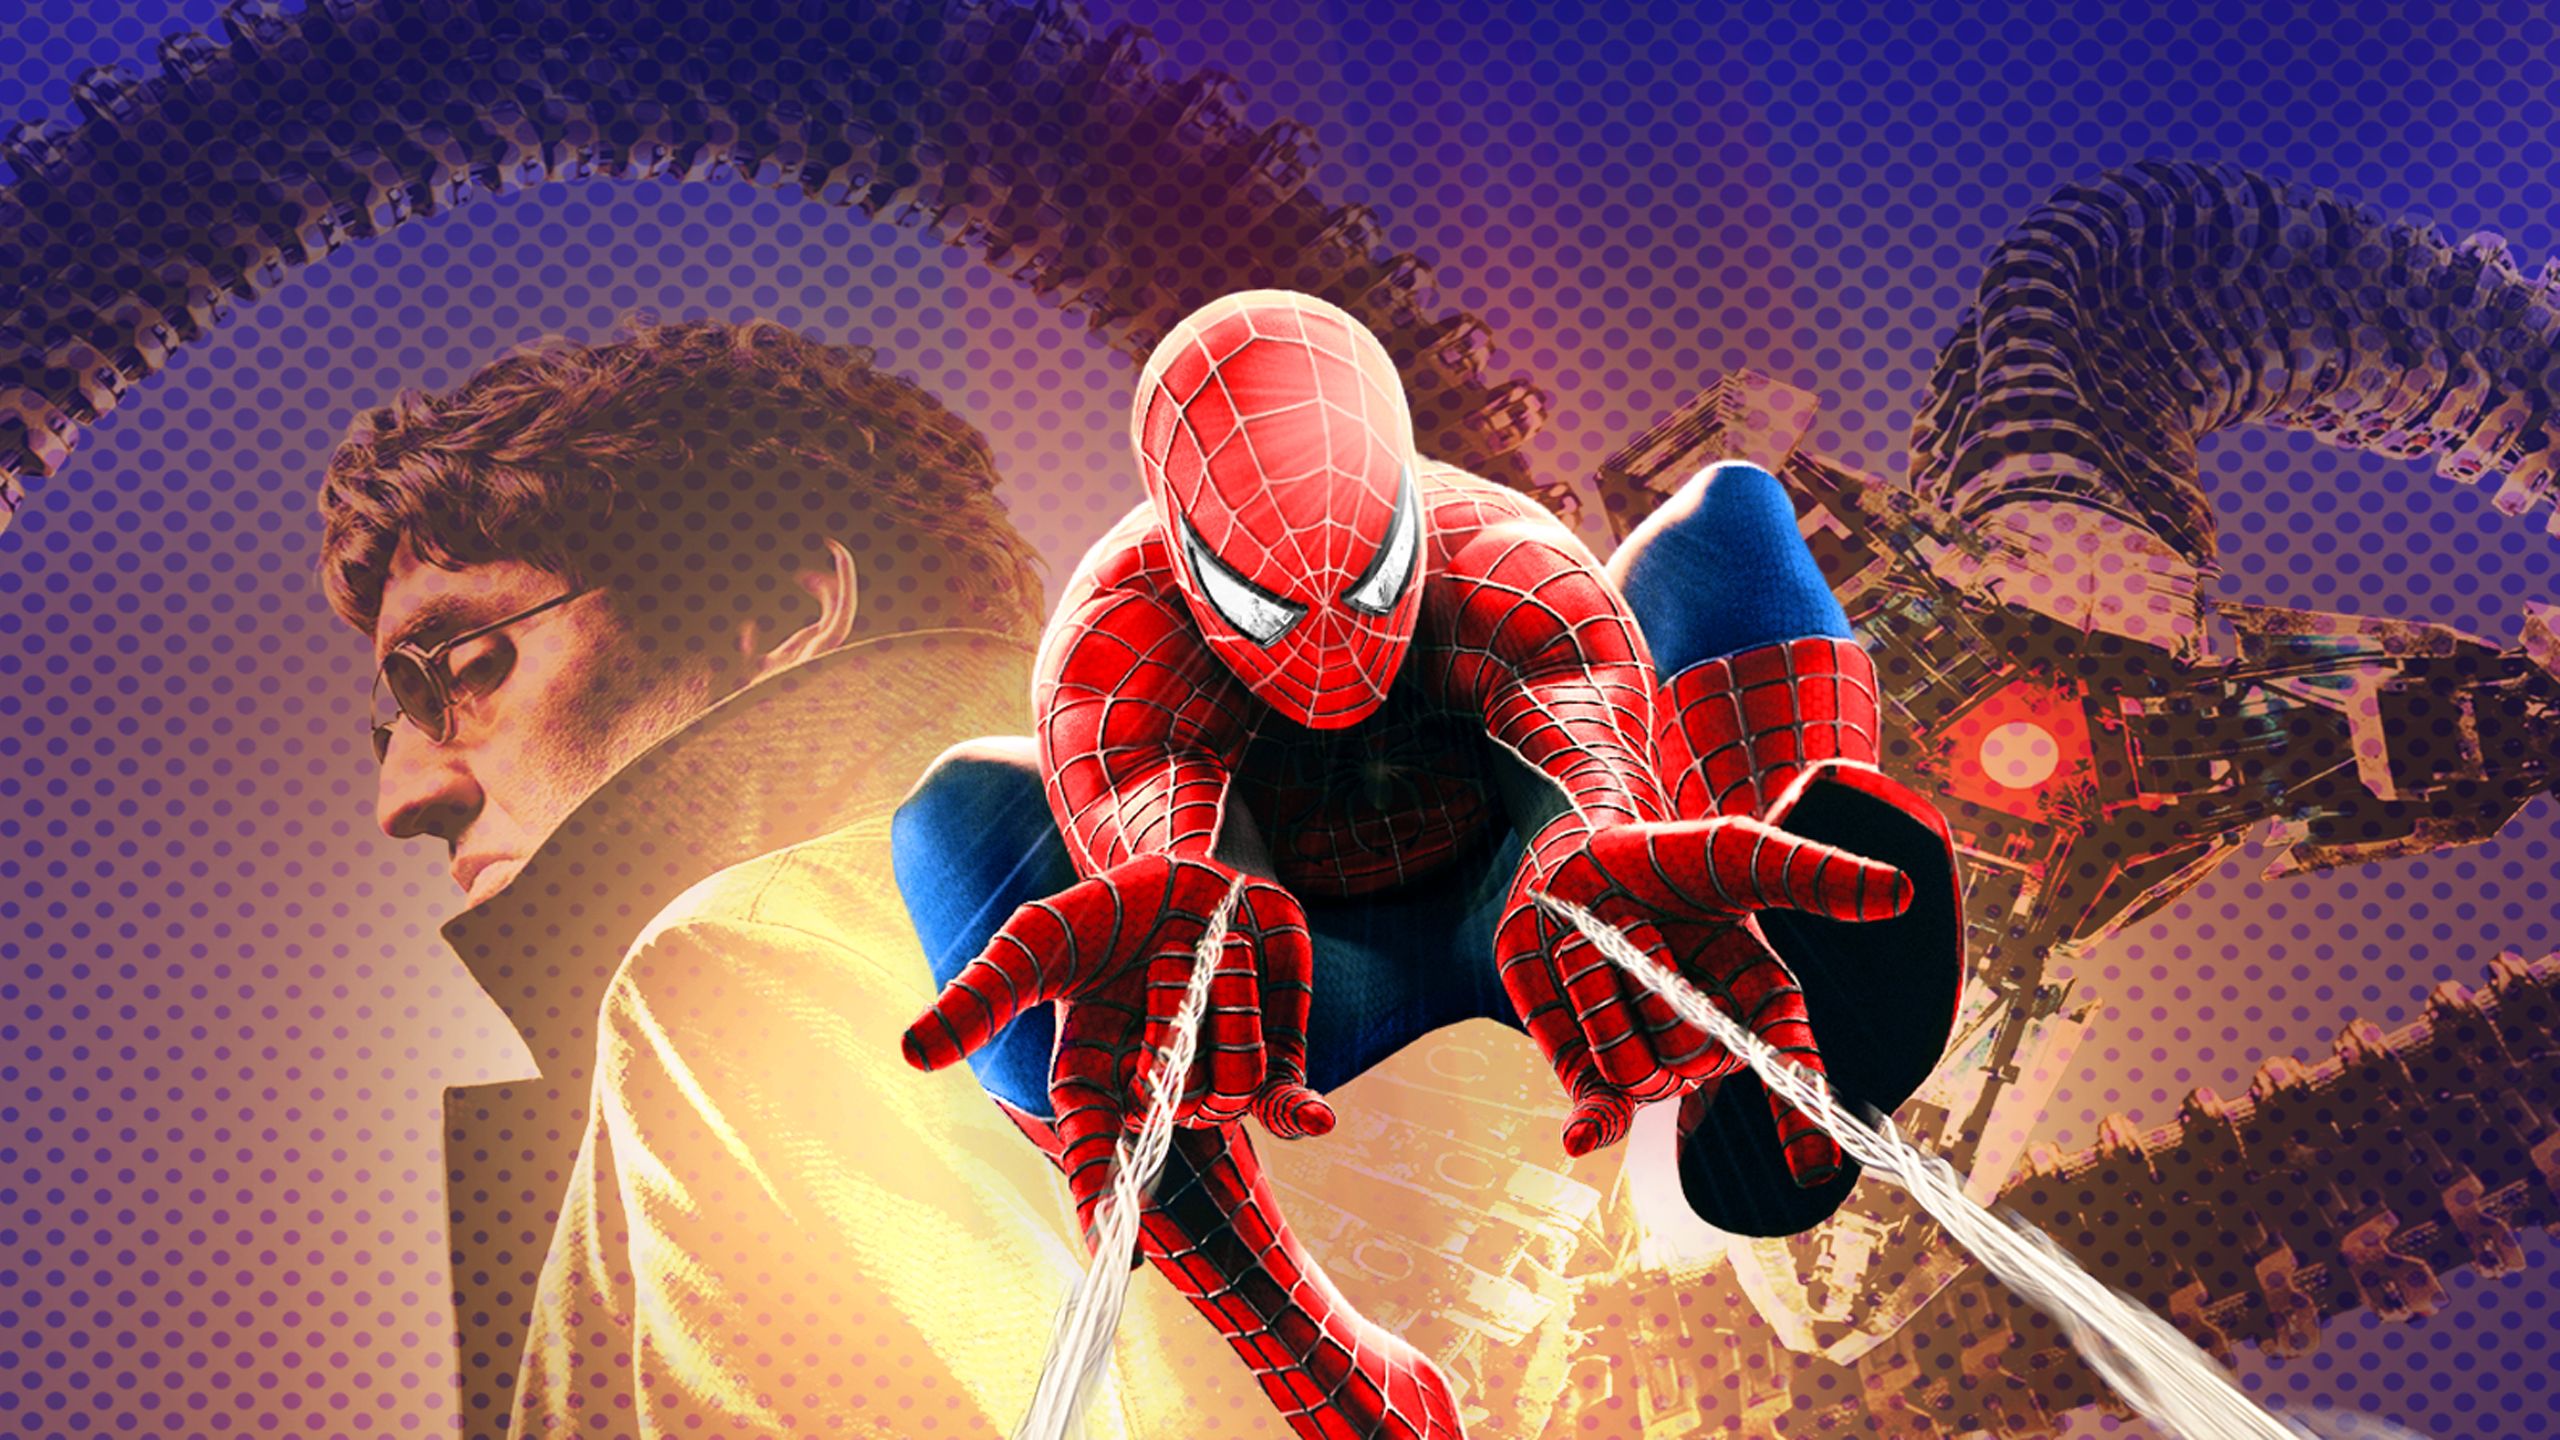 Spider-Man 2 | Movies Anywhere